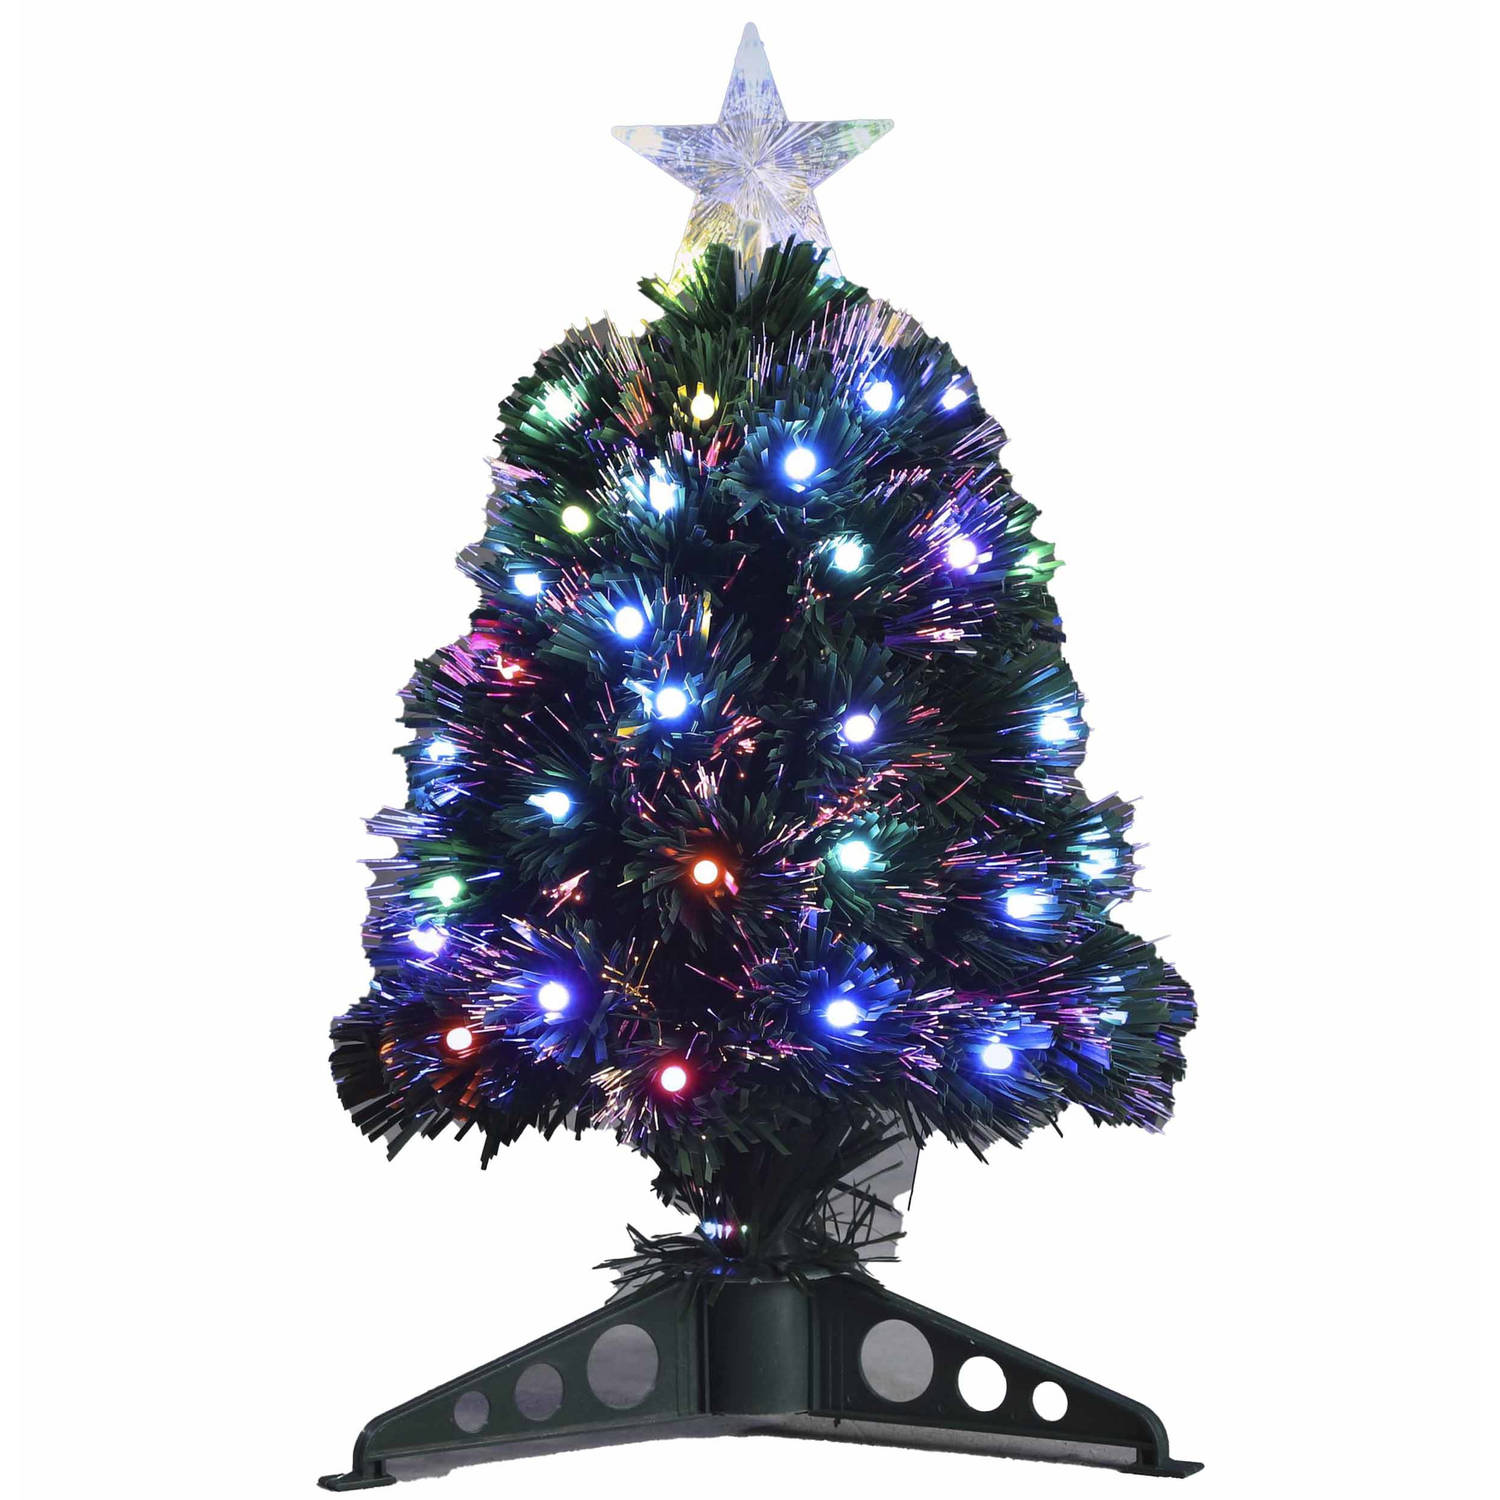 Fiber optic kerstboom/kunst met gekleurde lampjes 45 - Kunstkerstboom | Blokker